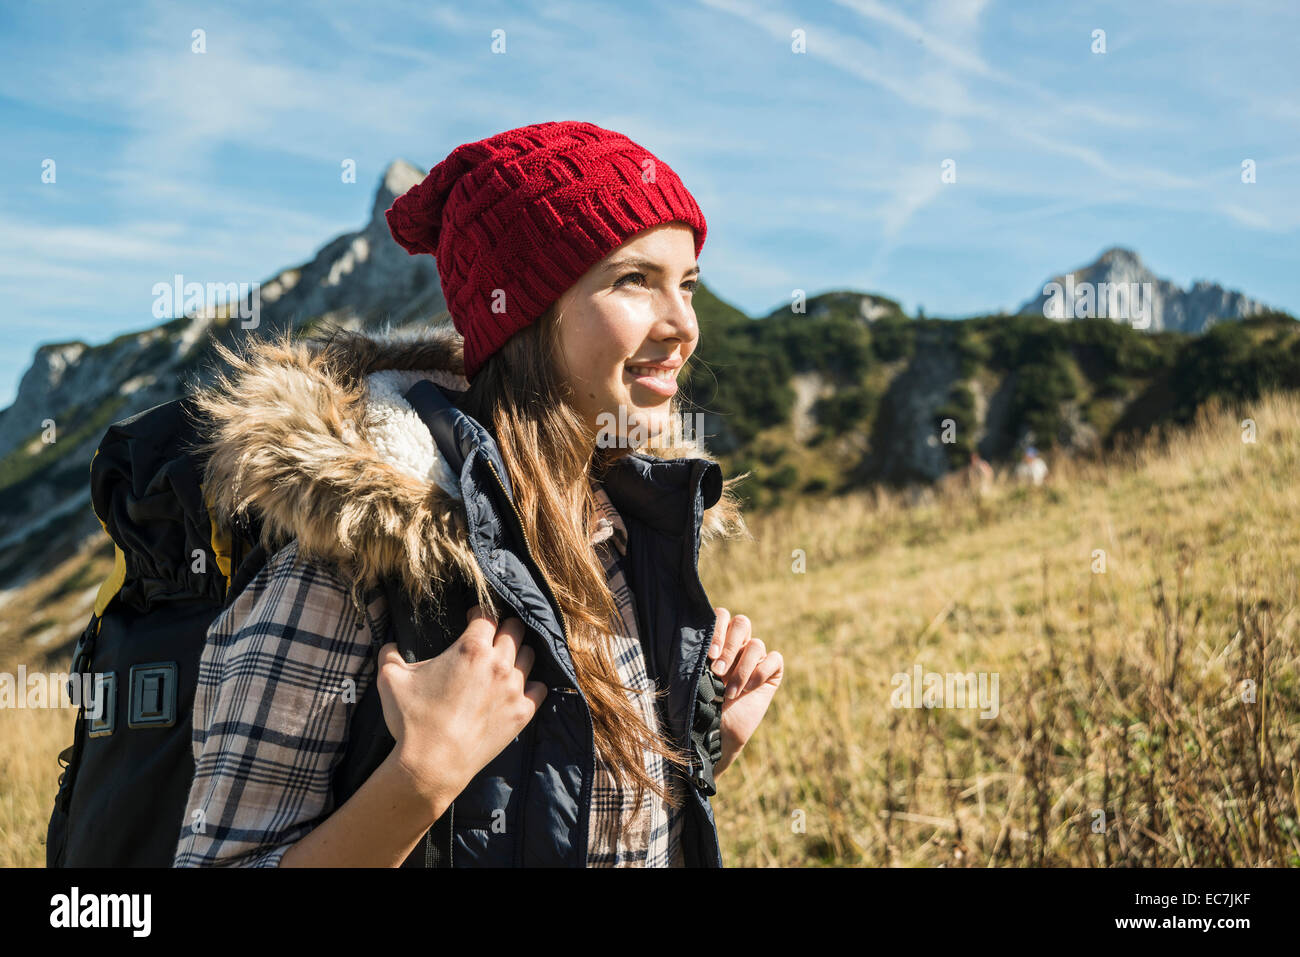 Austria, Tyrol, Tannheimer Tal, smiling young woman on hiking trip Stock Photo